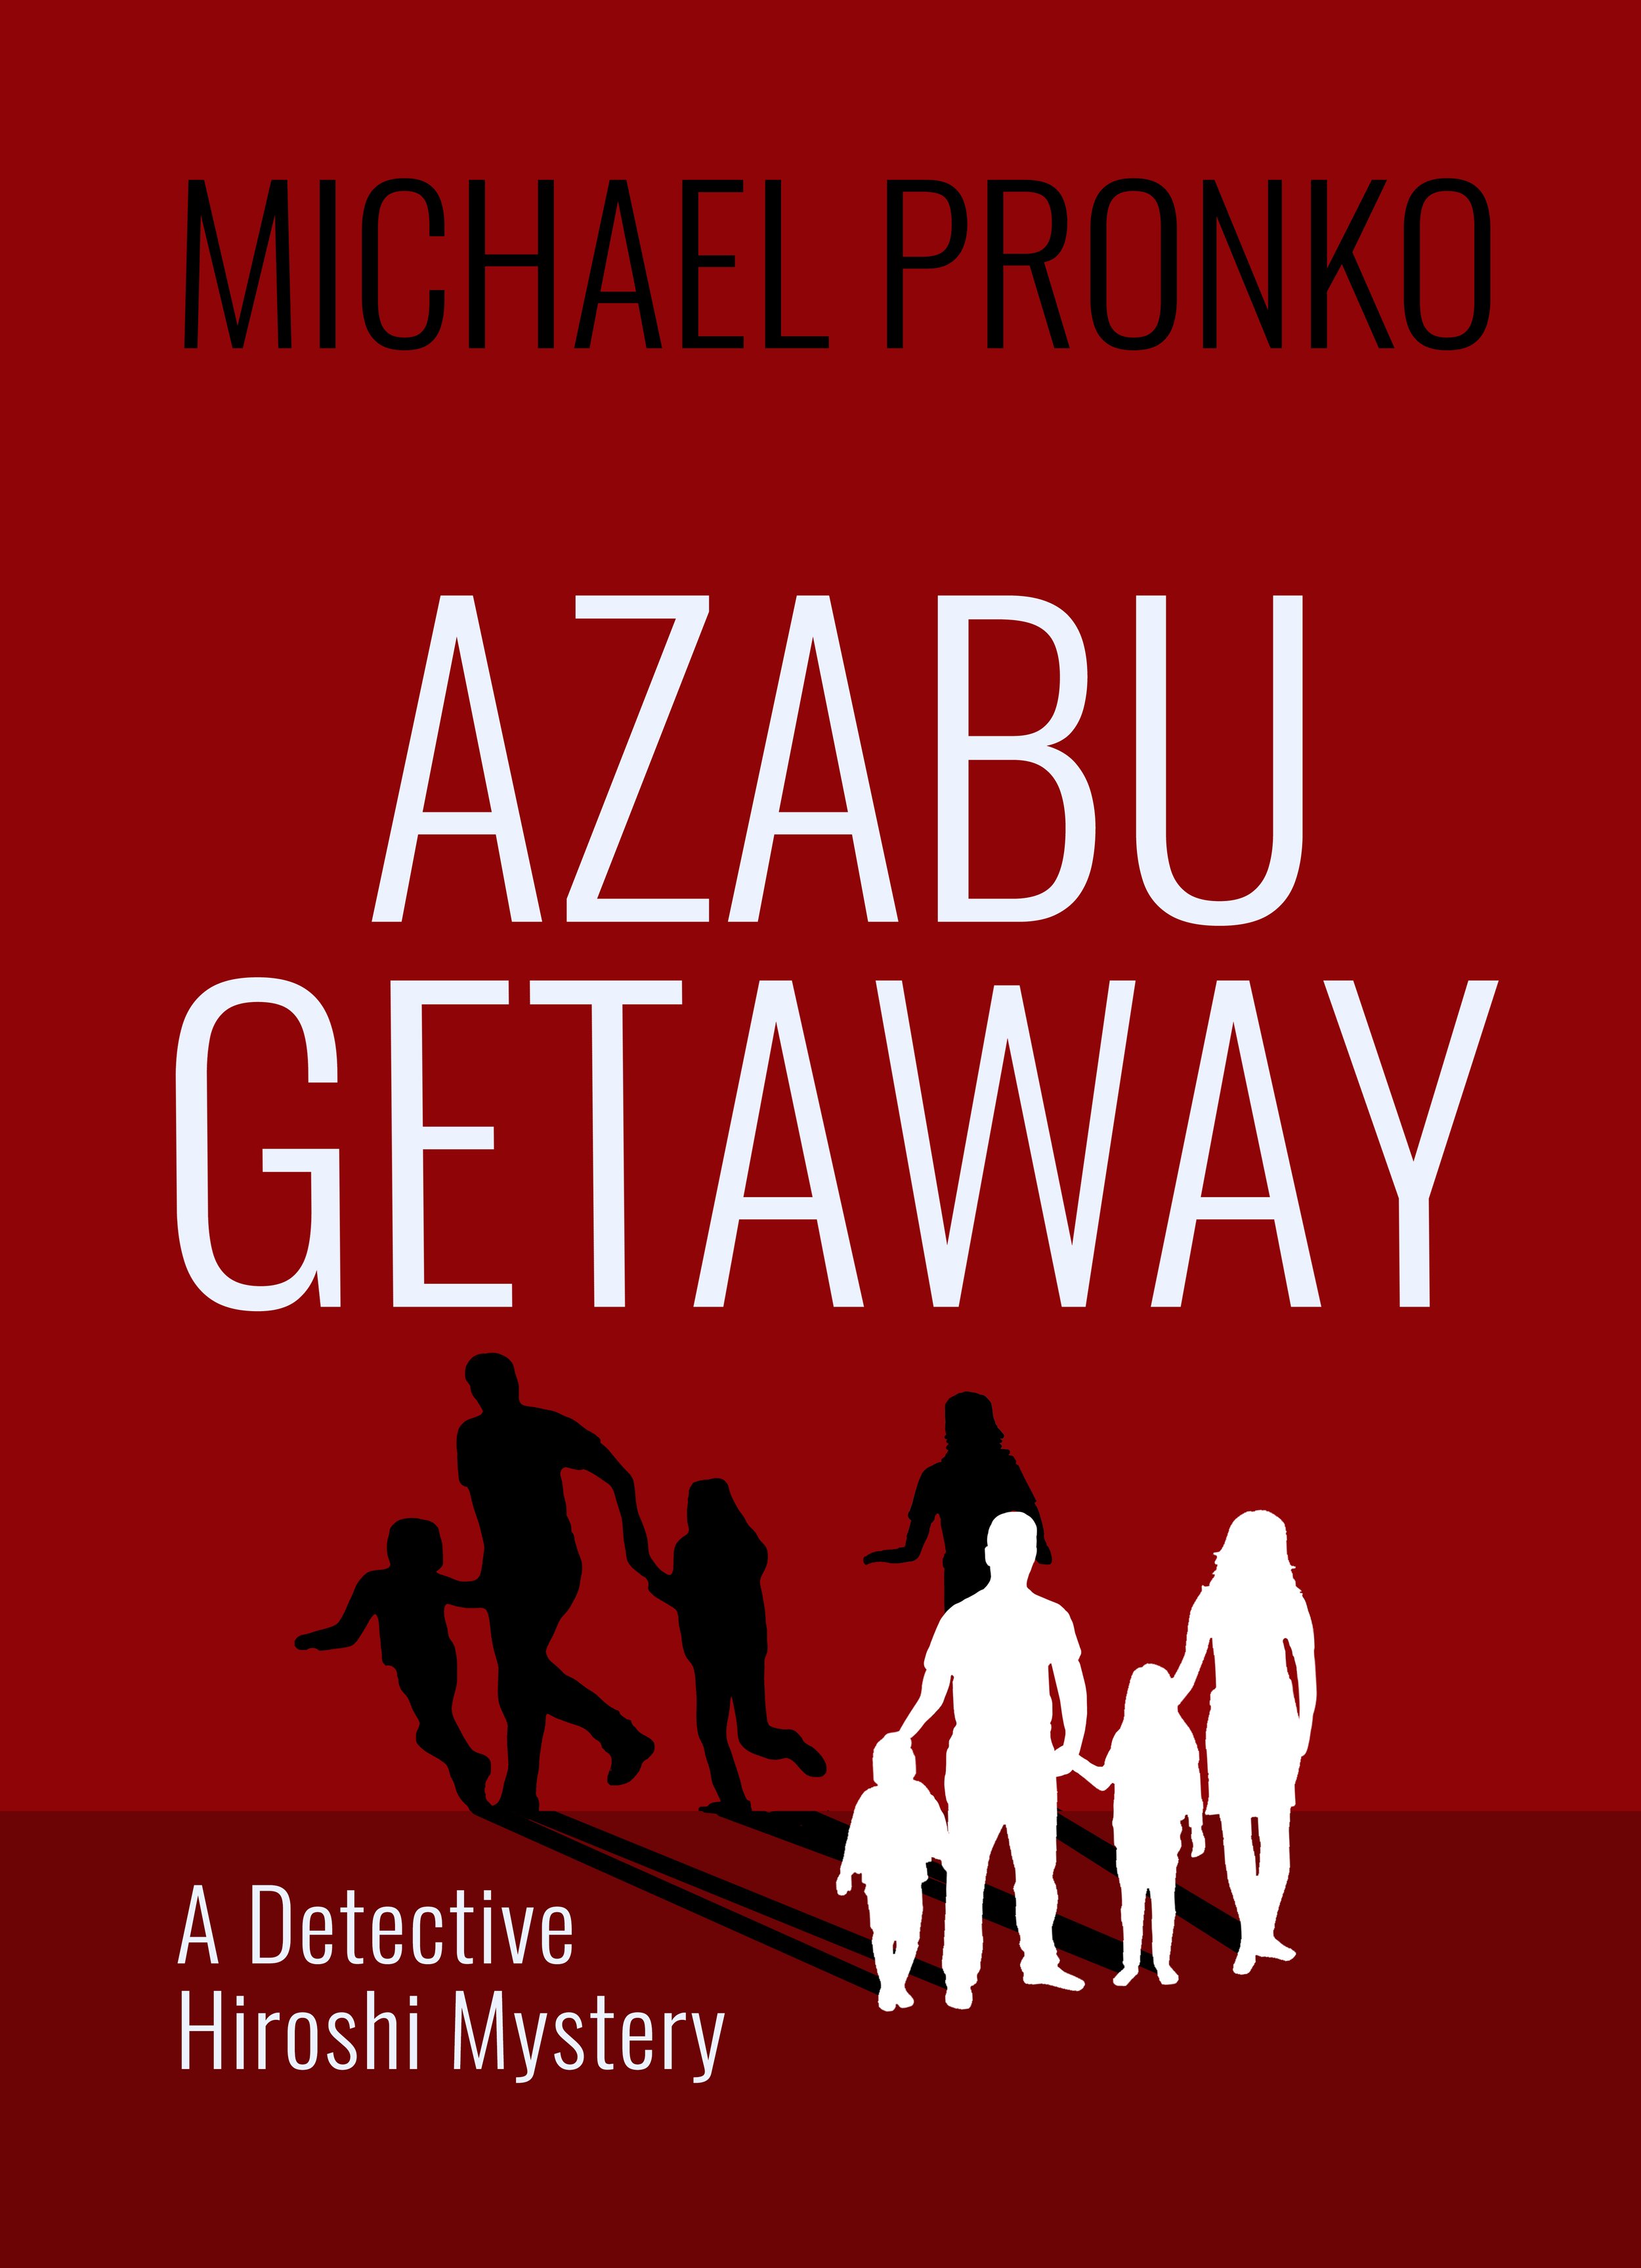 Azabu Gateway cover.jpg